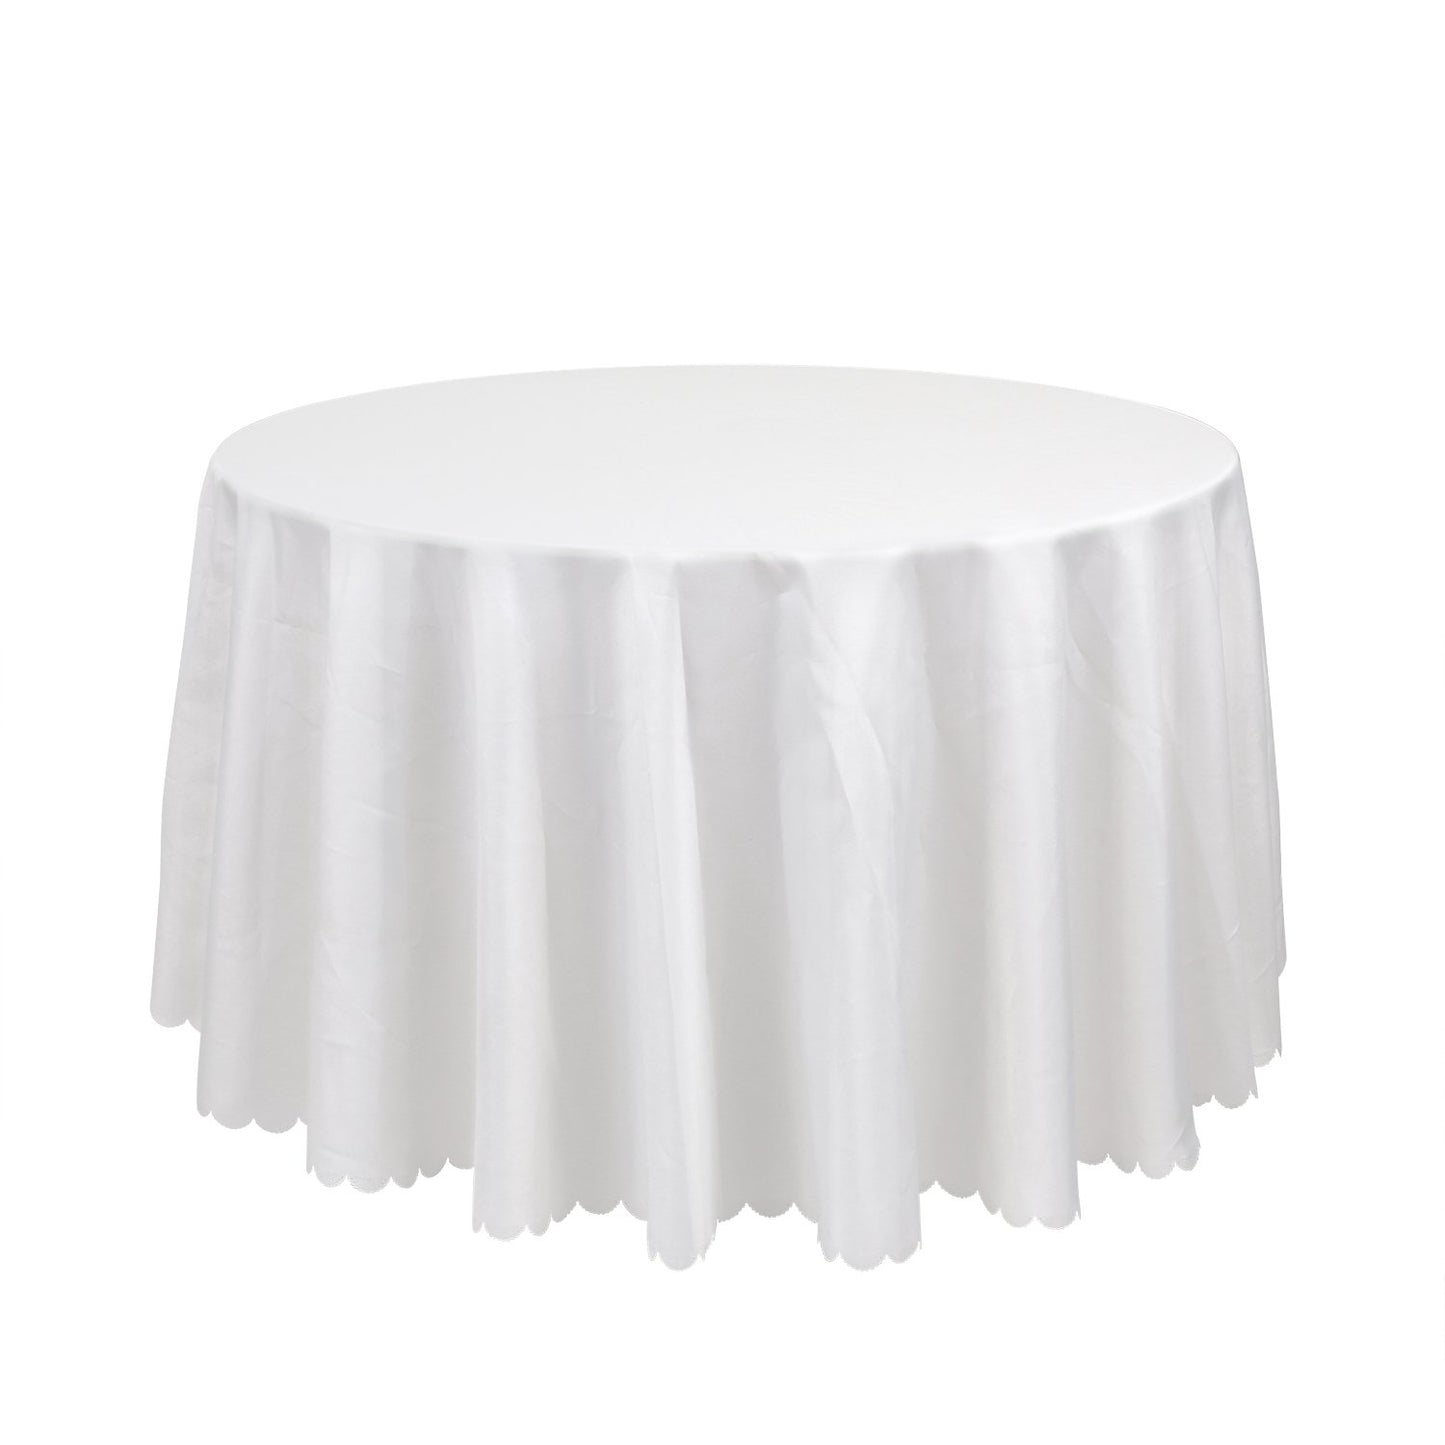 Tablecloth white round